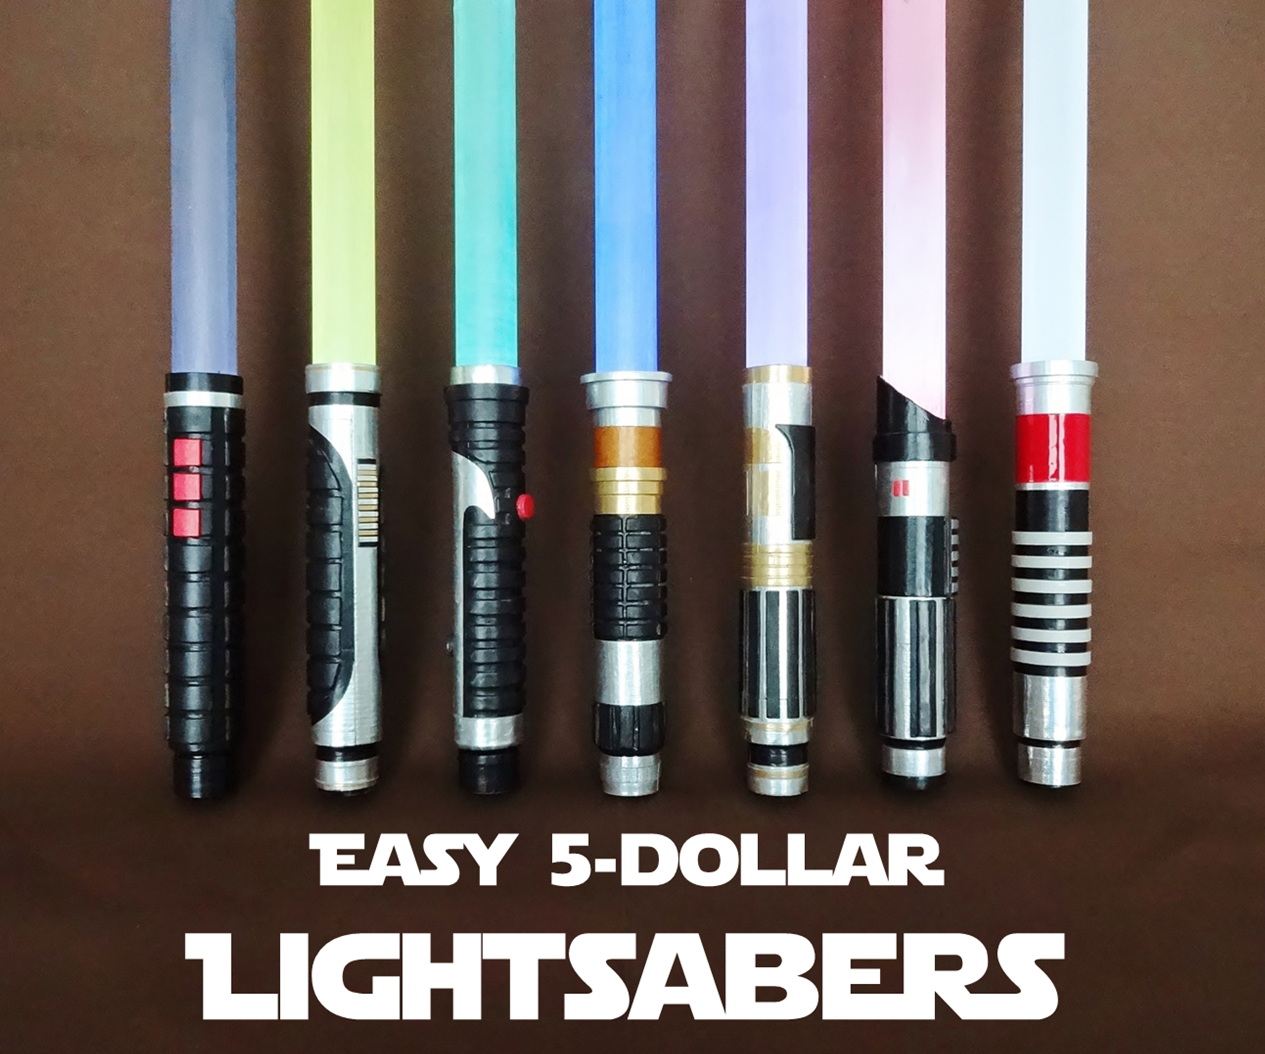 Easy $5 Lightsabers